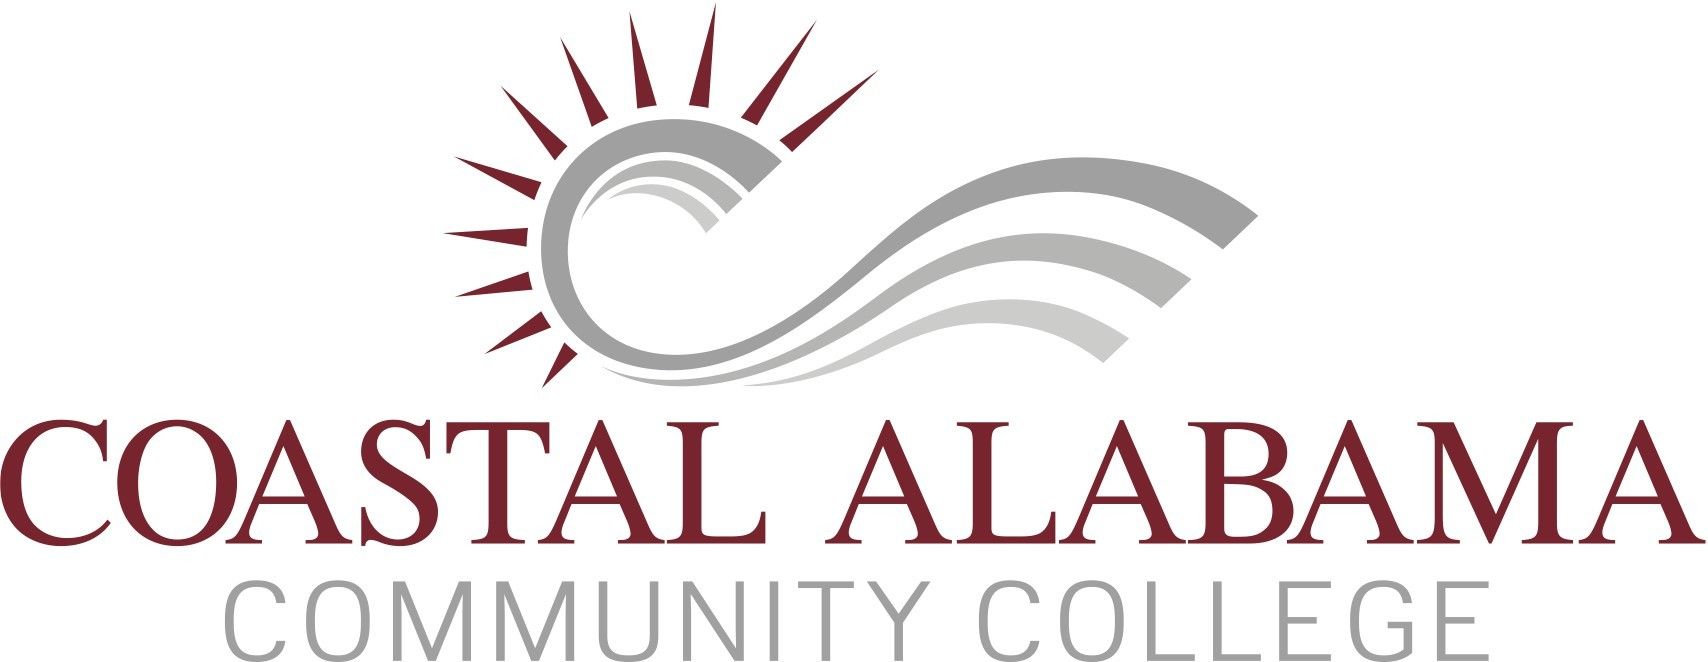 School logo for Coastal Alabama Community College in Bay Minette AL